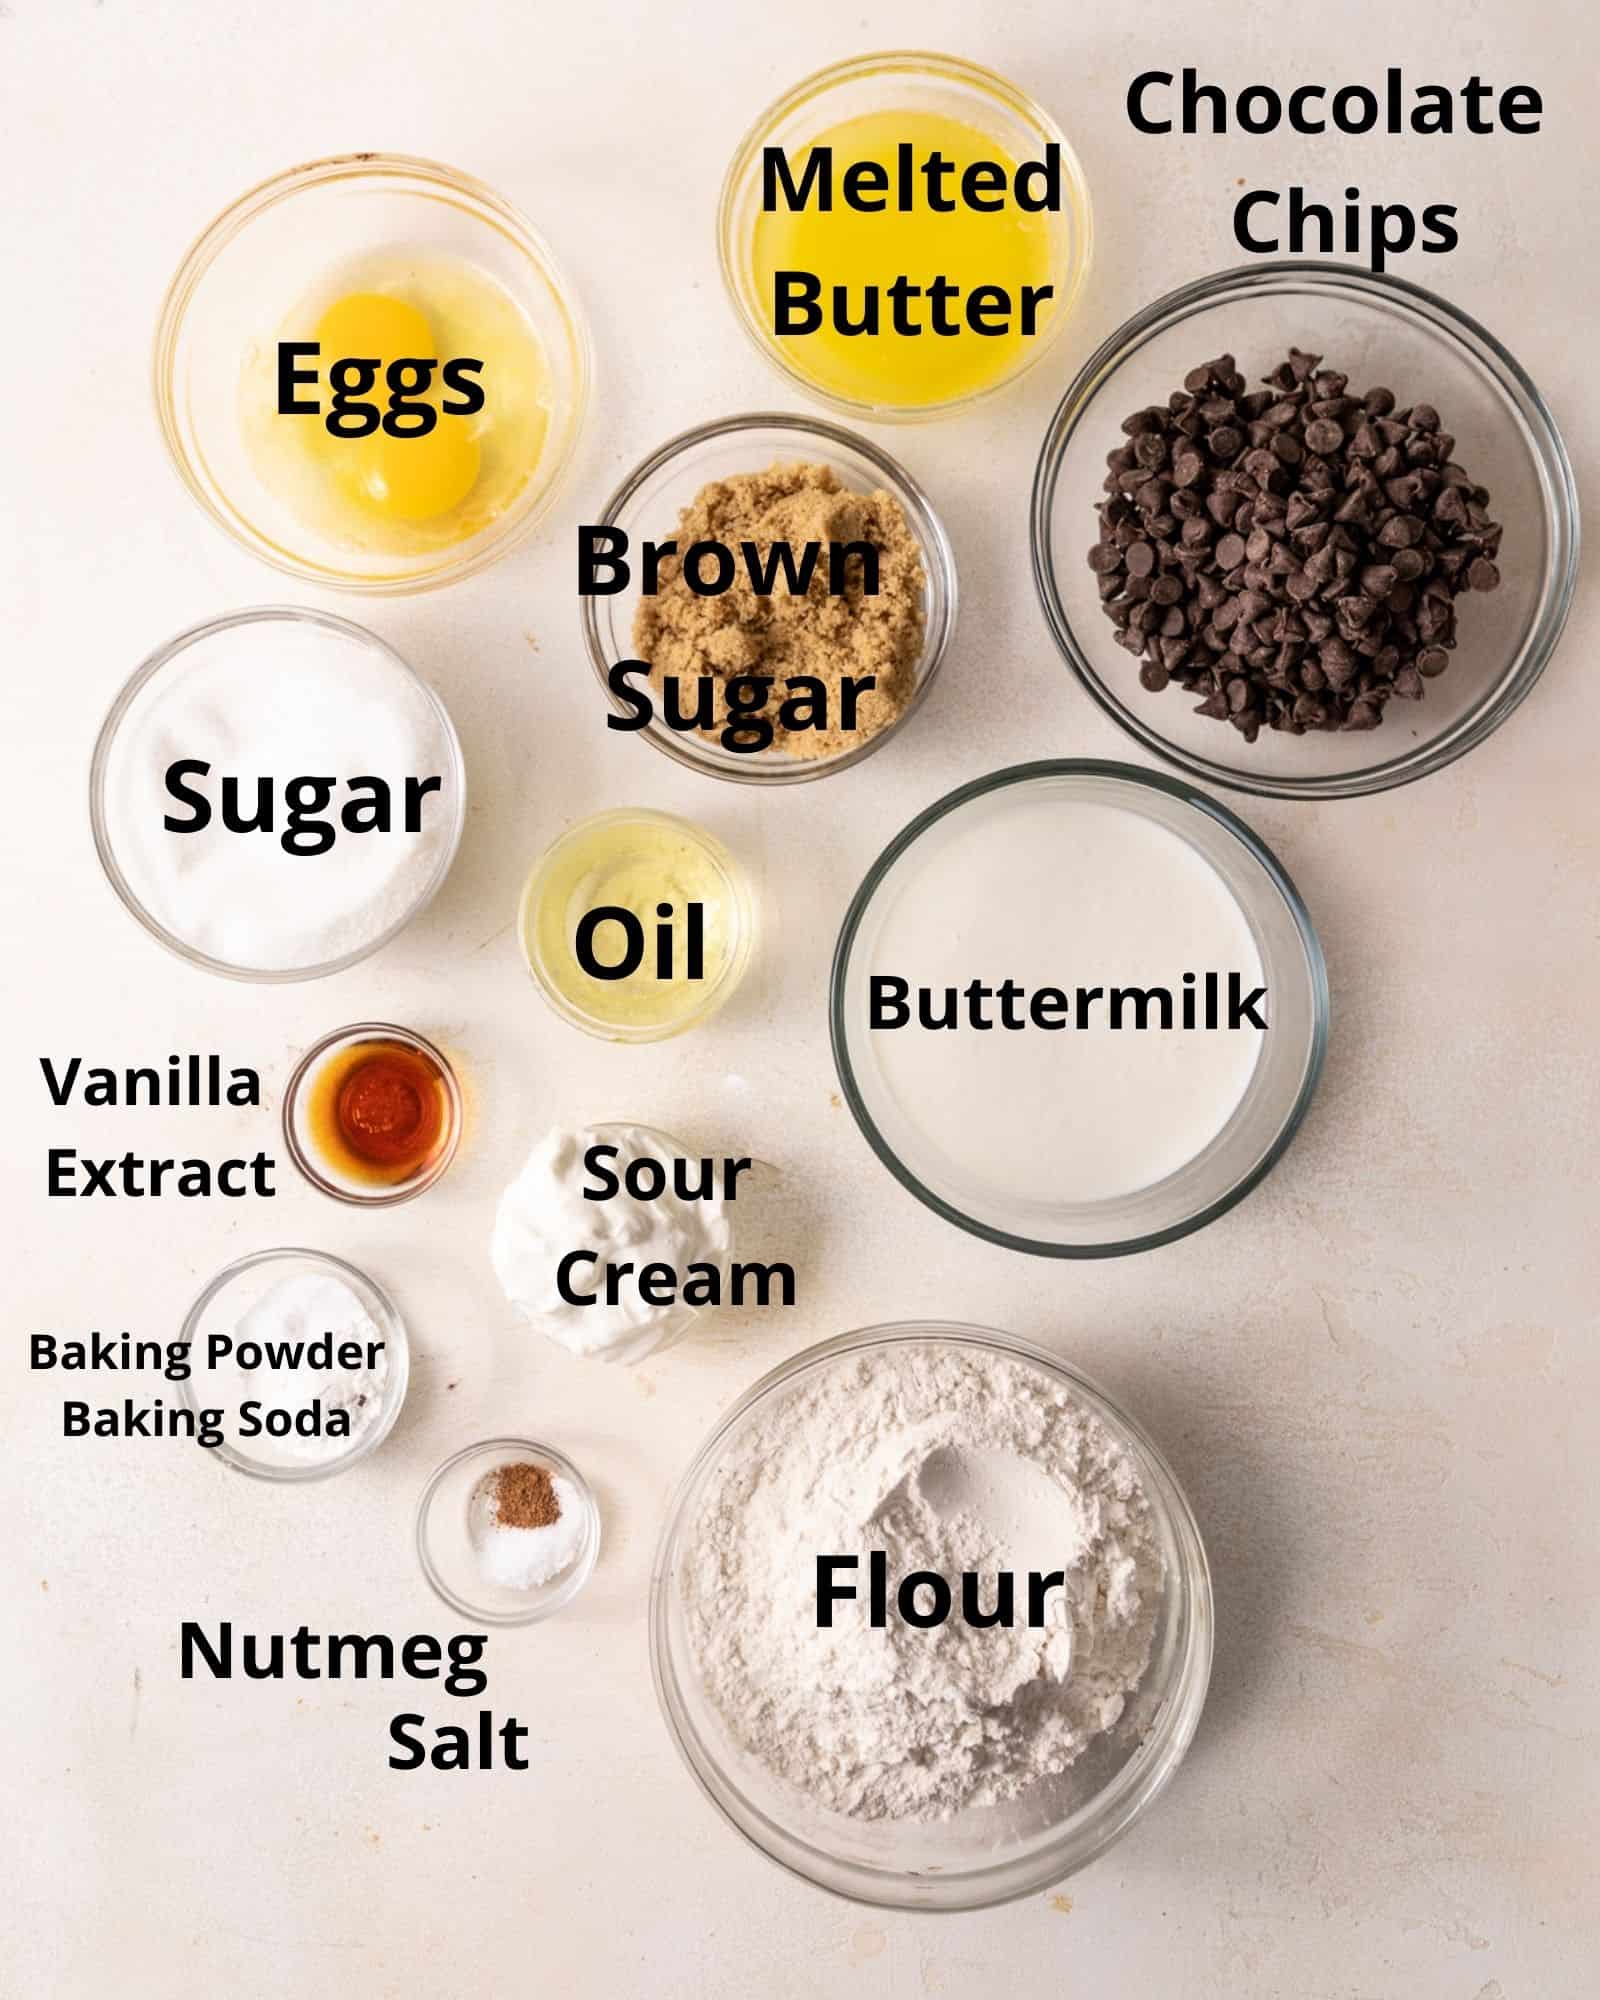 ingredients to make chocolate chip muffins - eggs, sugar, melted butter, brown sugar, sugar, oil, vanilla extract, sour cream, buttermilk, flour, baking powder, baking soda, salt, nutmeg, and chocolate chips.